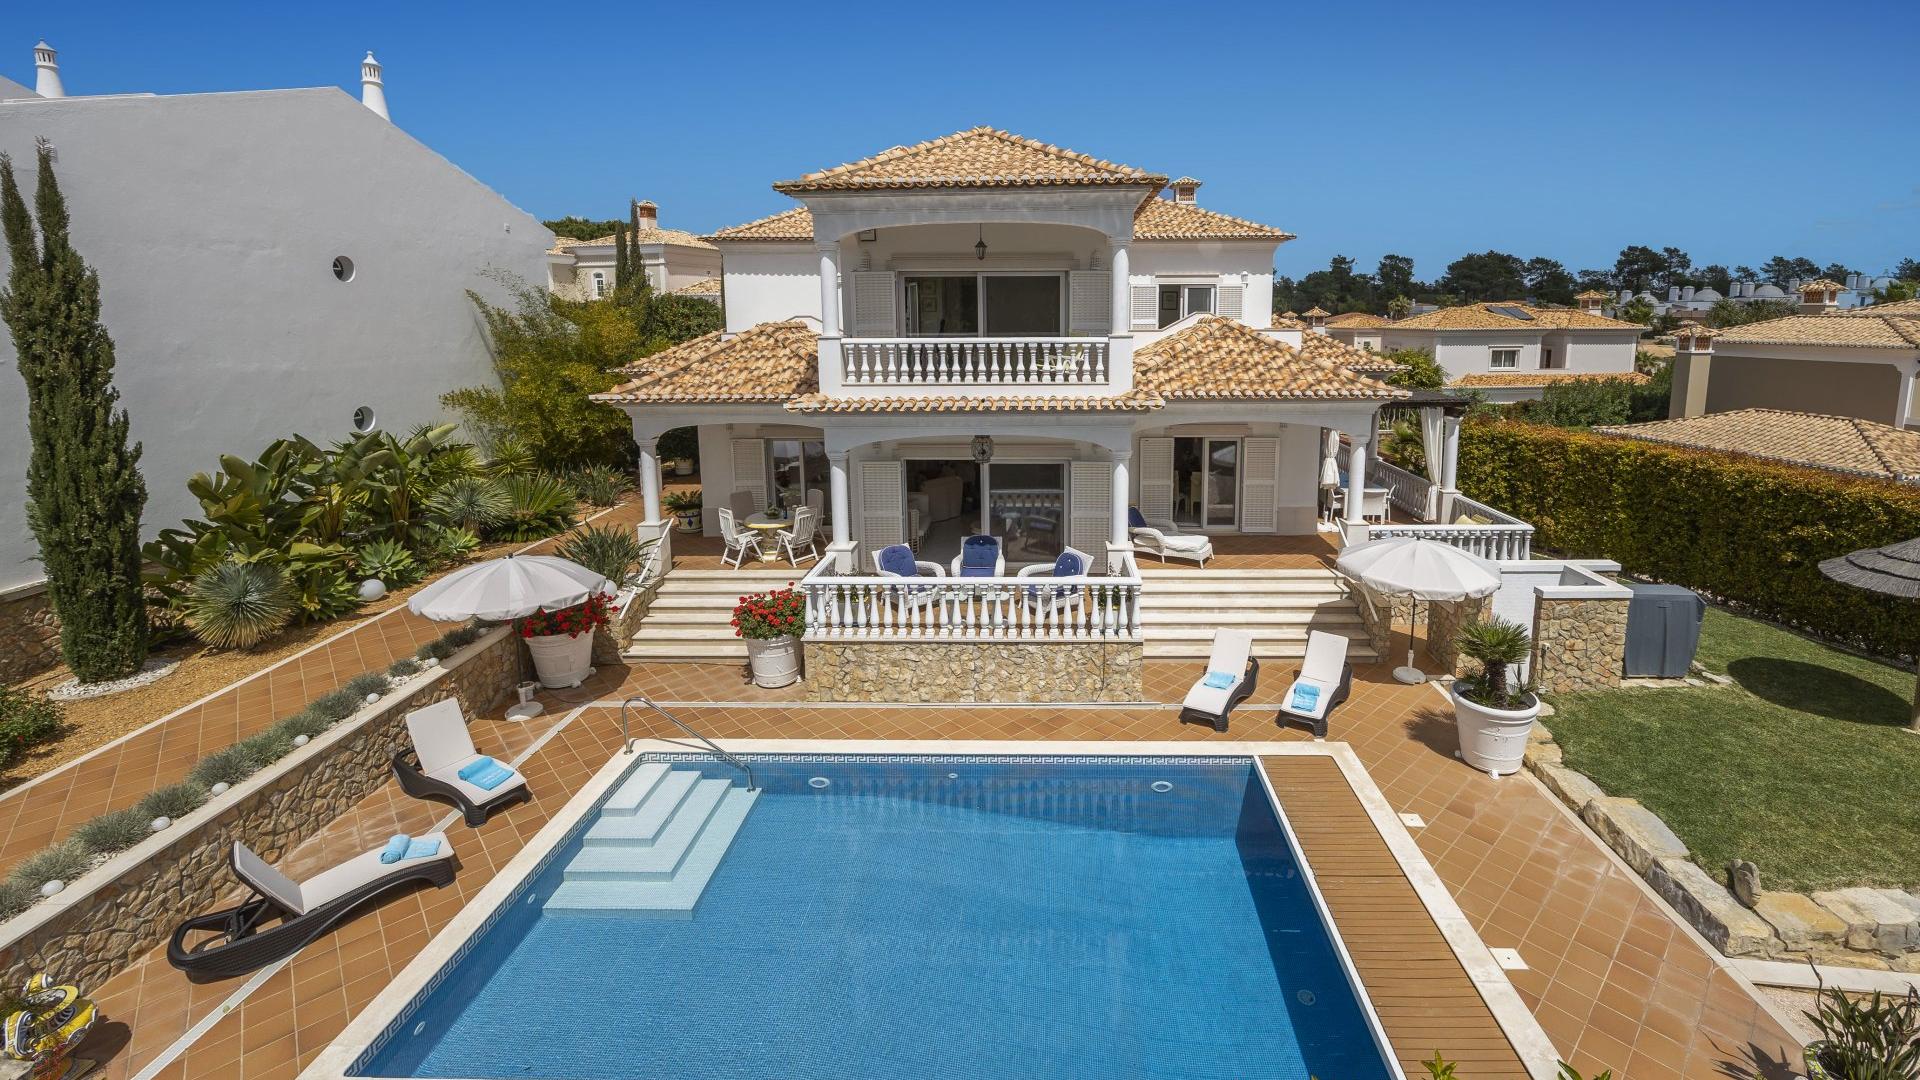 Villa Endless Summer - Varandas do Lago, Quinta do Lago, Algarve - Villa_Endless_Summer_Exterior_1.jpg